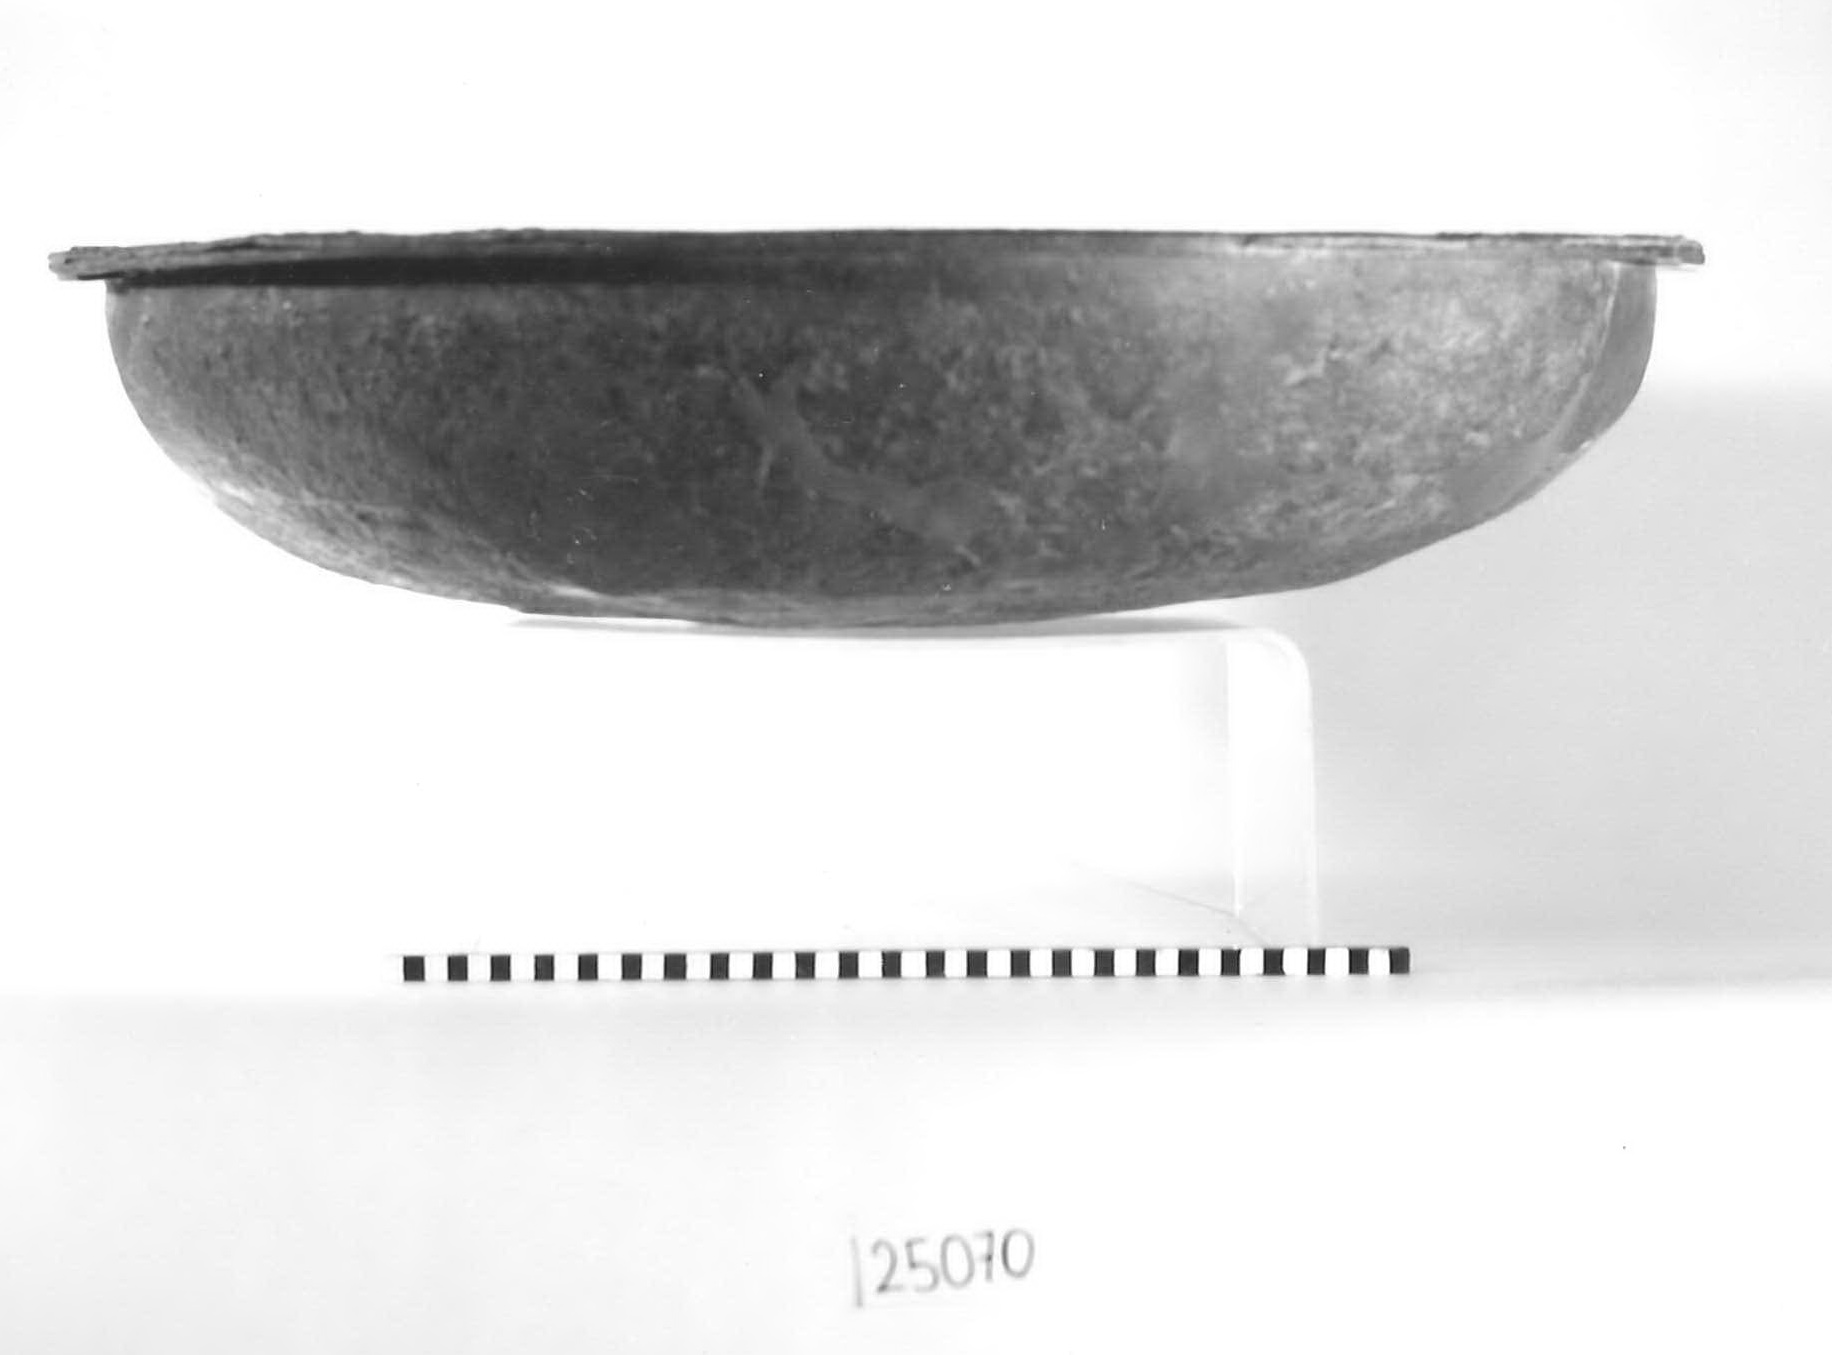 calderone - Piceno V, fabbrica etrusca (fine sec. V a.C)